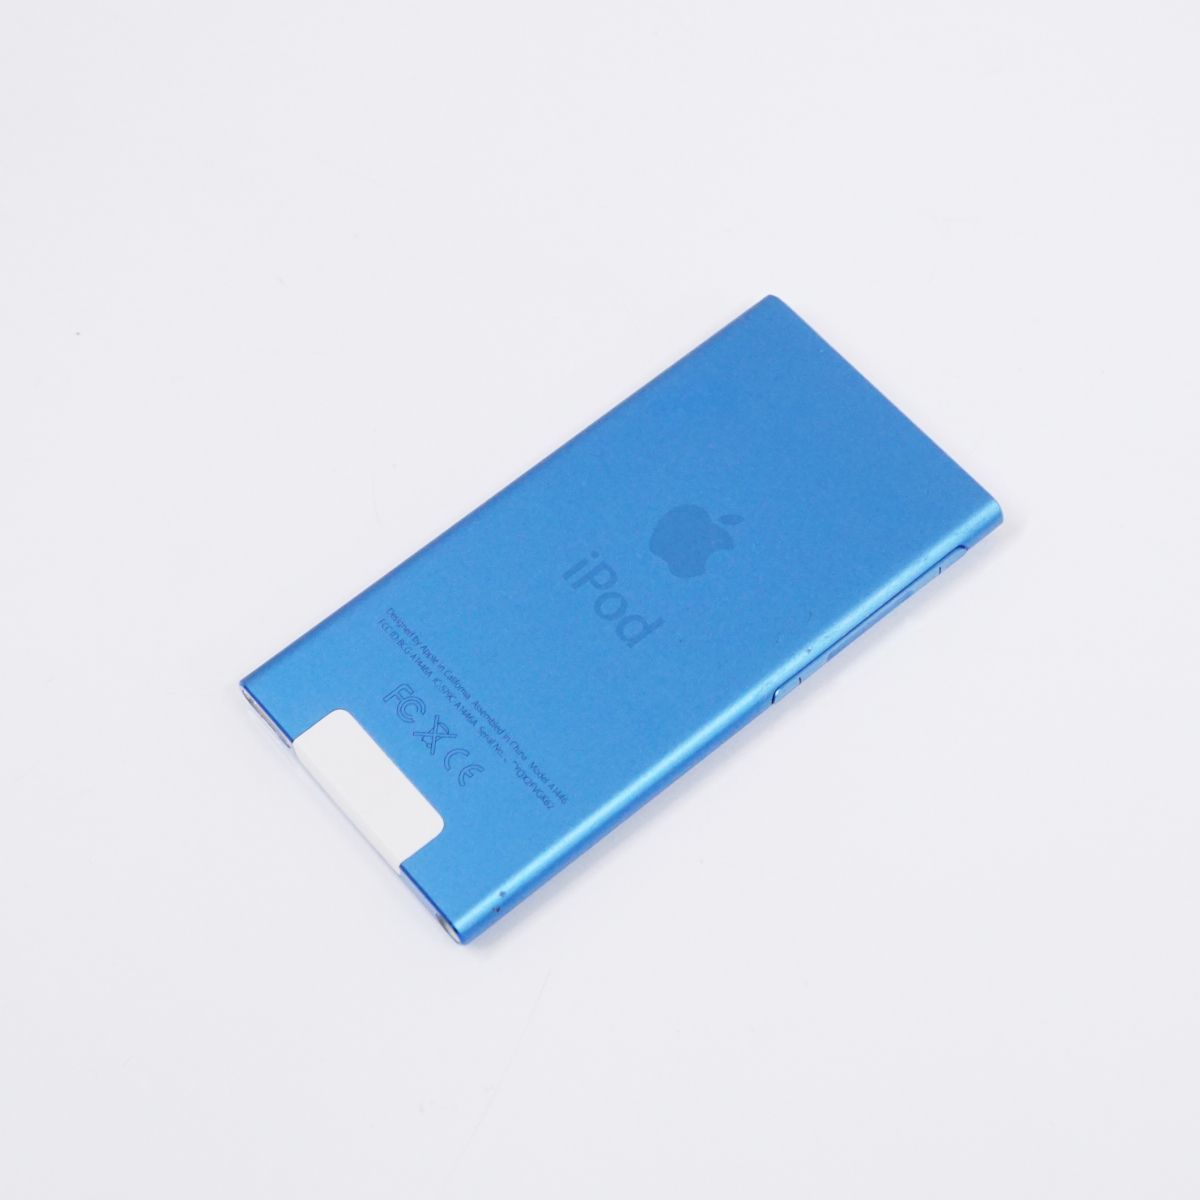 Apple アップル iPod nano アイポッド ナノ 16GB USED美品 第7世代 ブルー MKN02J A1446 完動品 T V9123_画像3